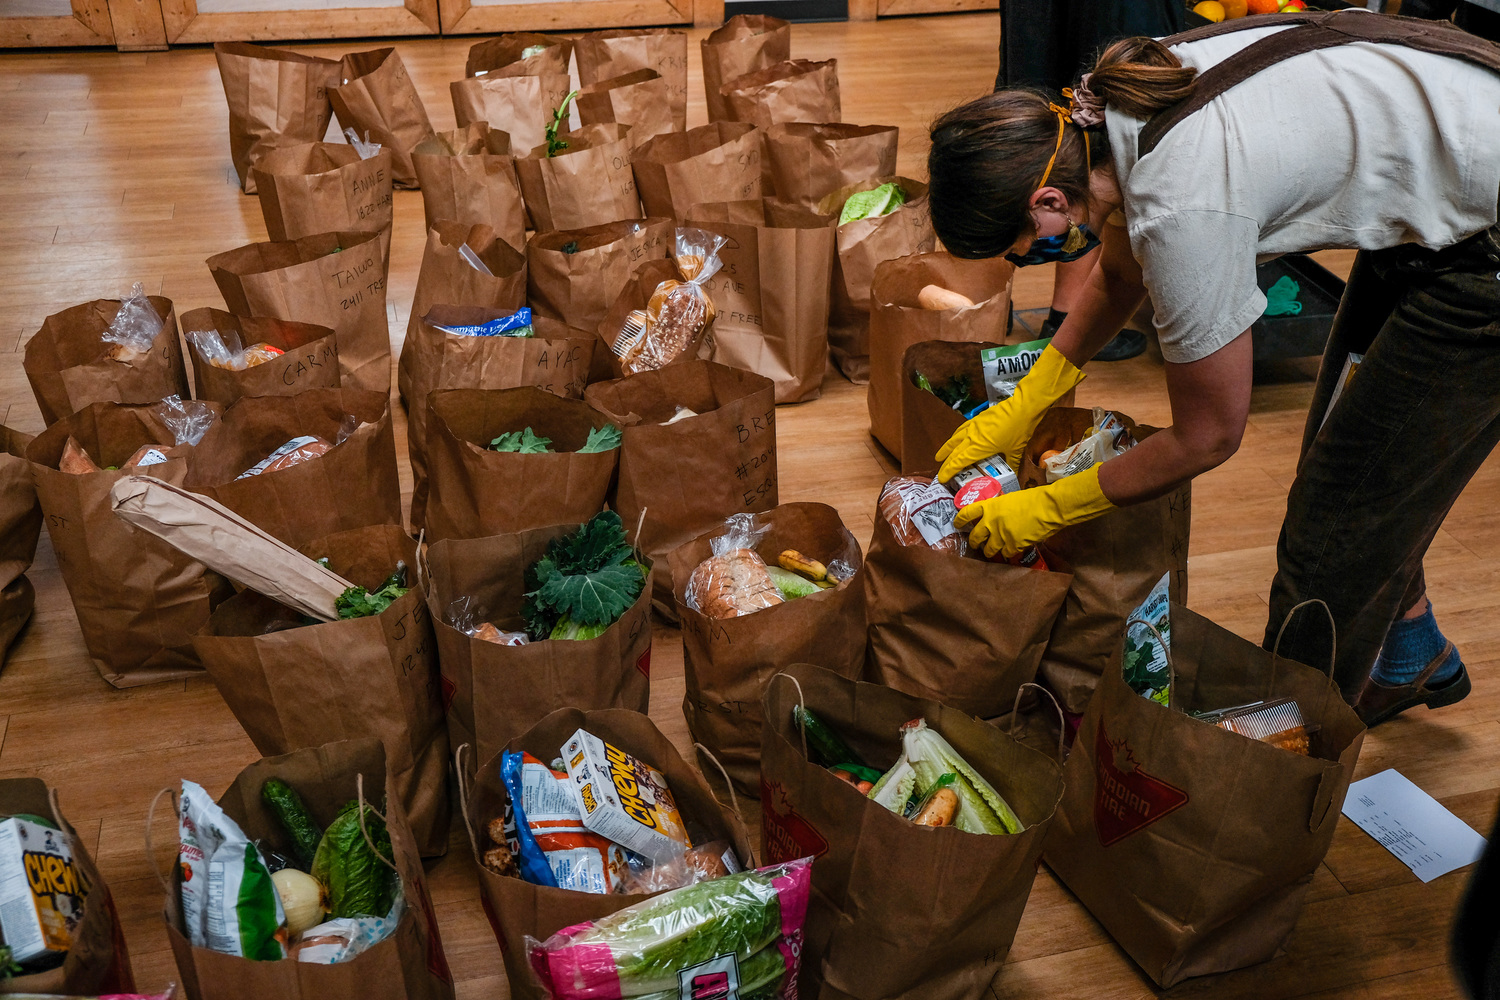 volunteer packs hampers at Community Food Support